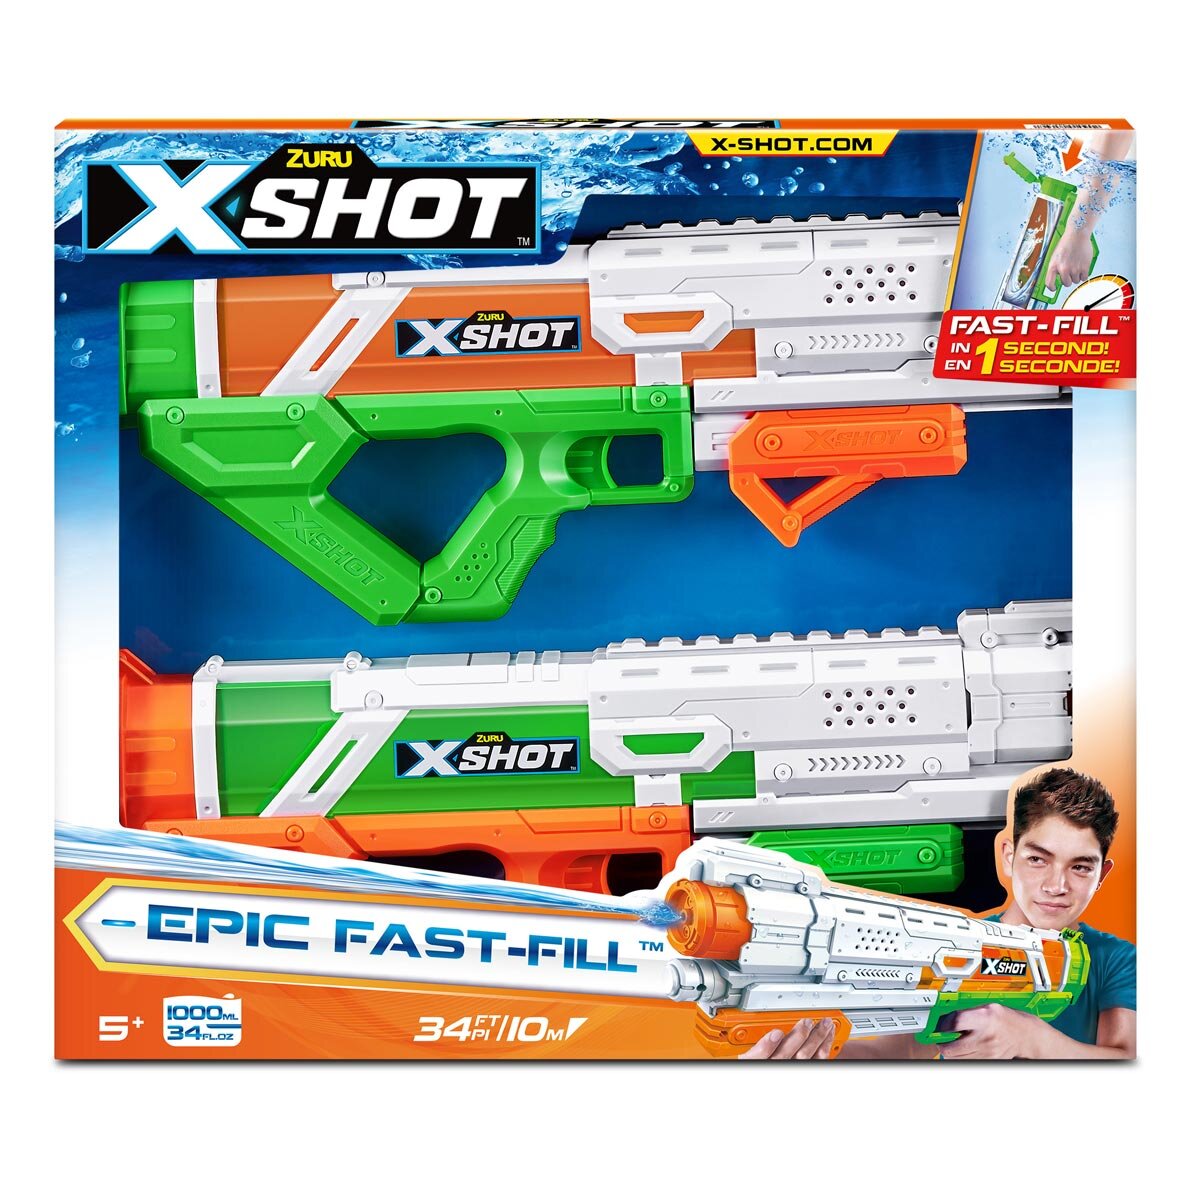 Buy Zuru X-Shot Water Blaster 2 Pack Box Image at Costco.co.uk